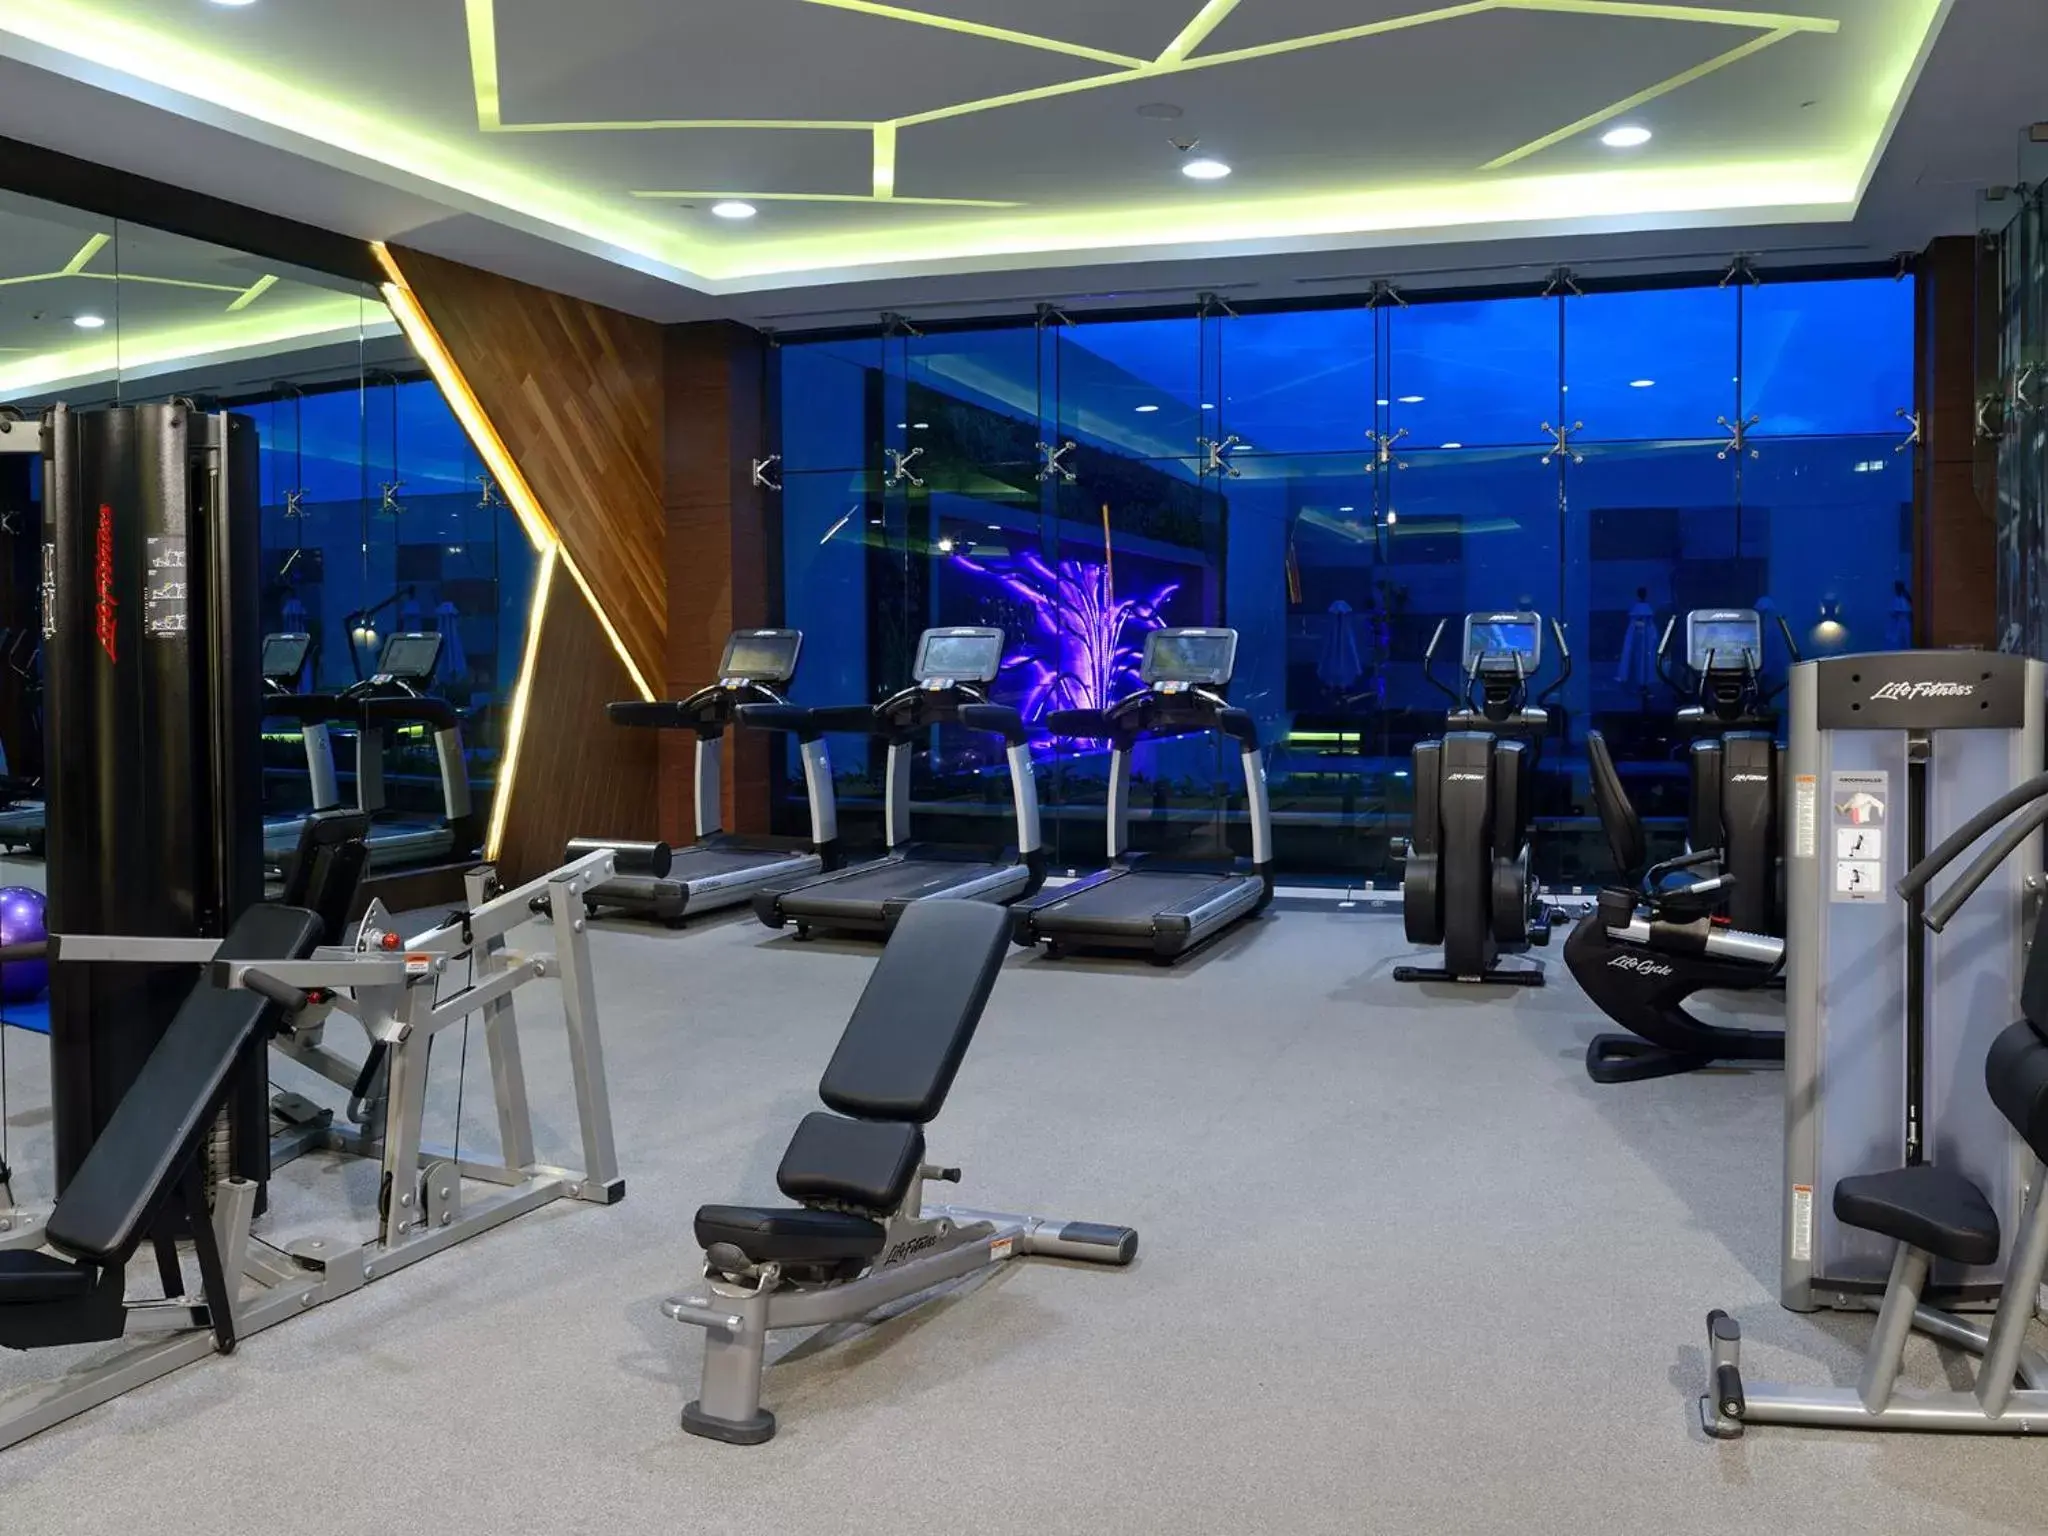 Fitness centre/facilities, Fitness Center/Facilities in HS HOTSSON Hotel Irapuato